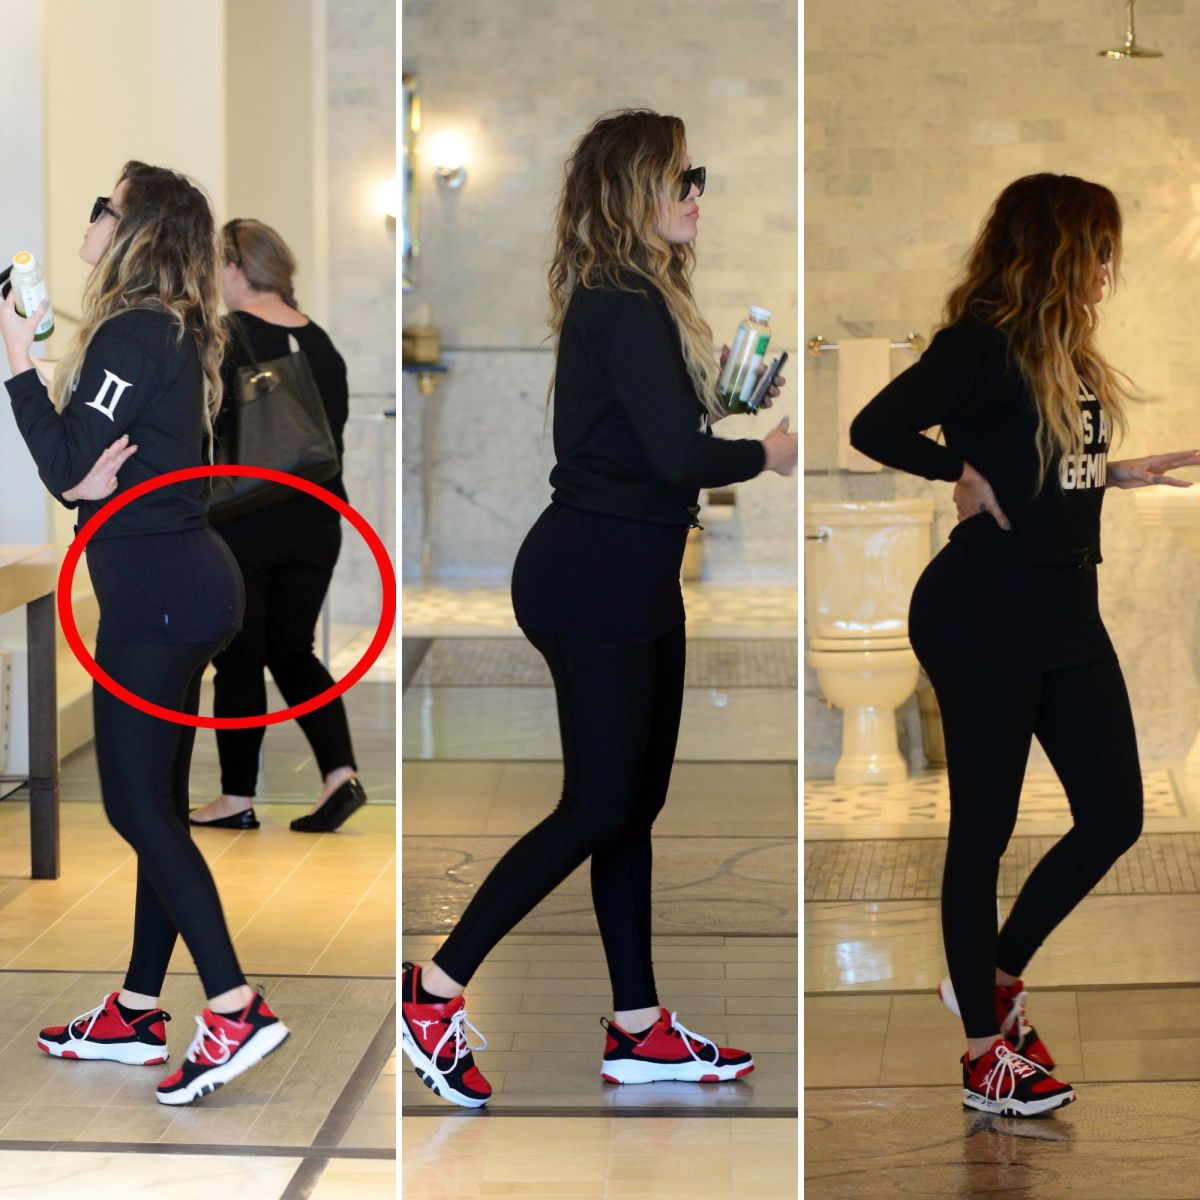 brenda mccomb recommends Is Khloe Kardashians Butt Fake